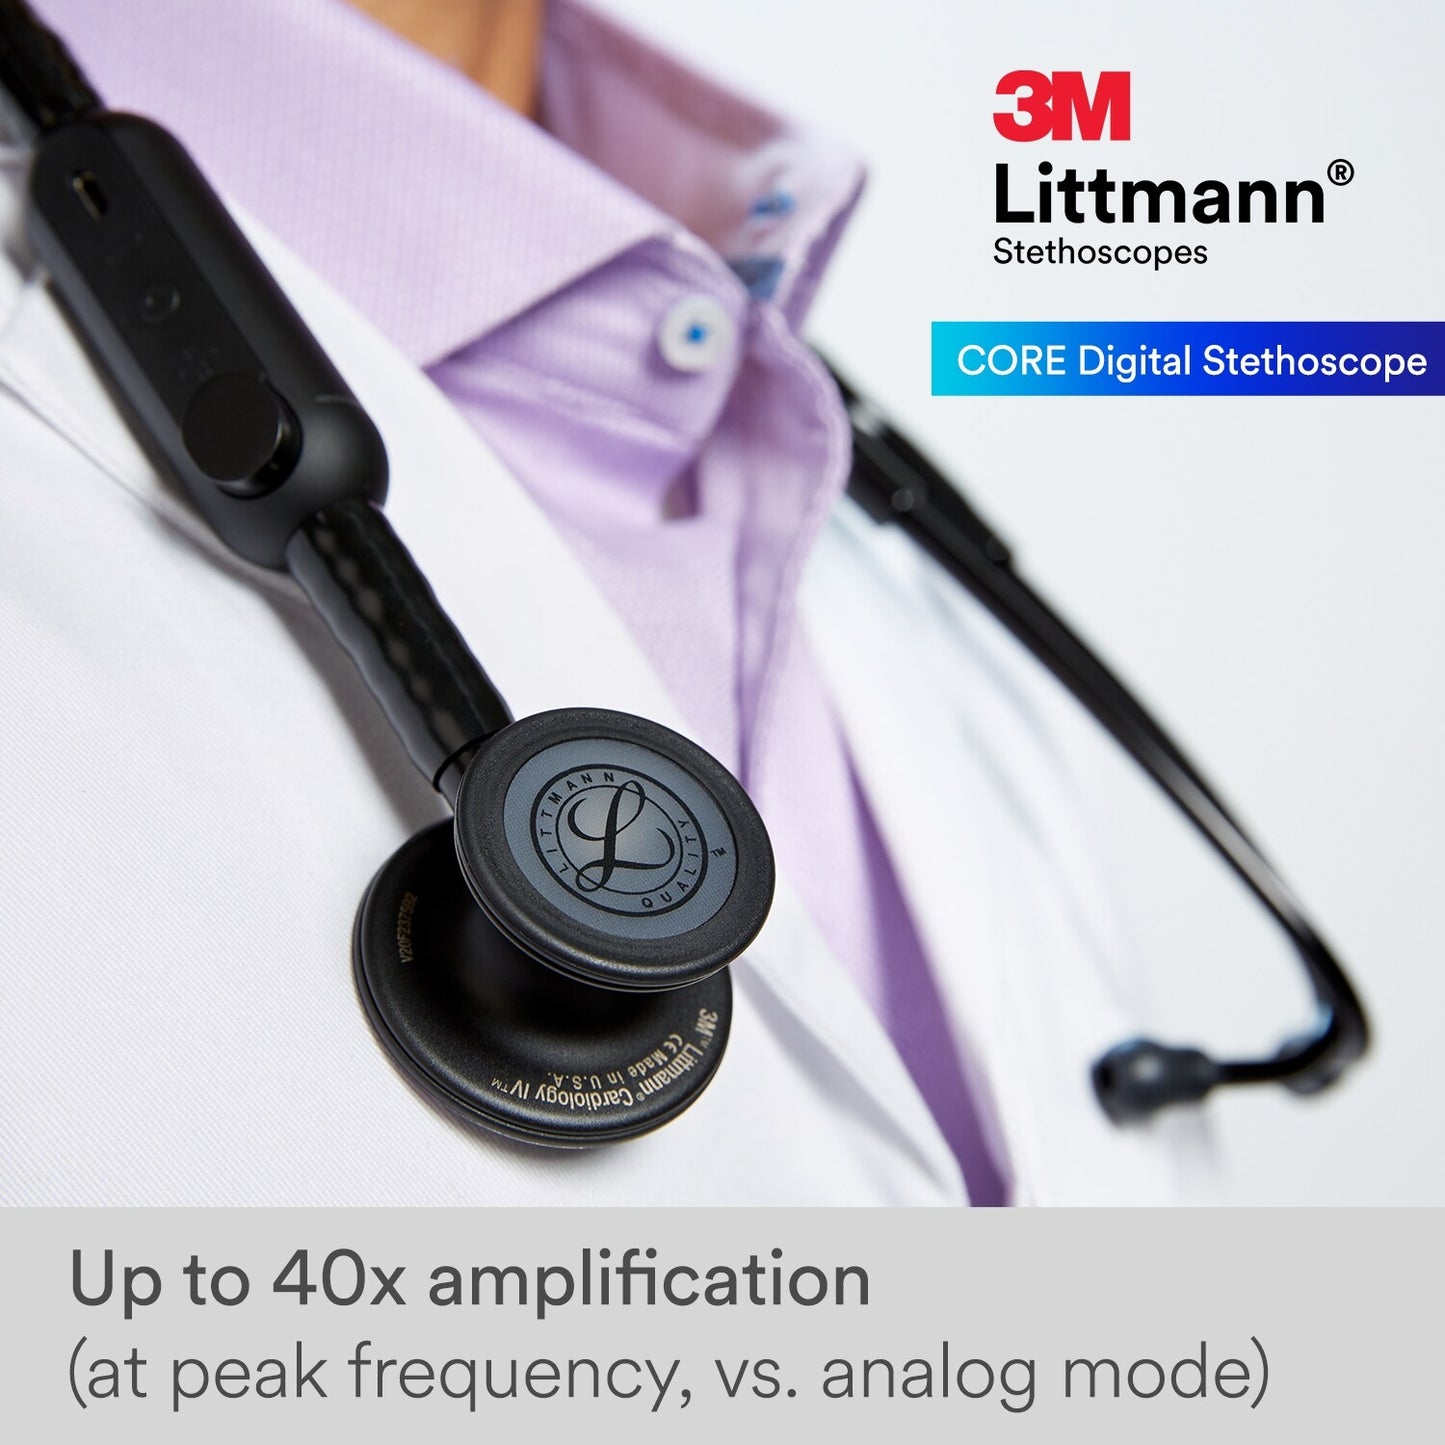 Littmann CORE Digital Stethoscope 8490 - Black